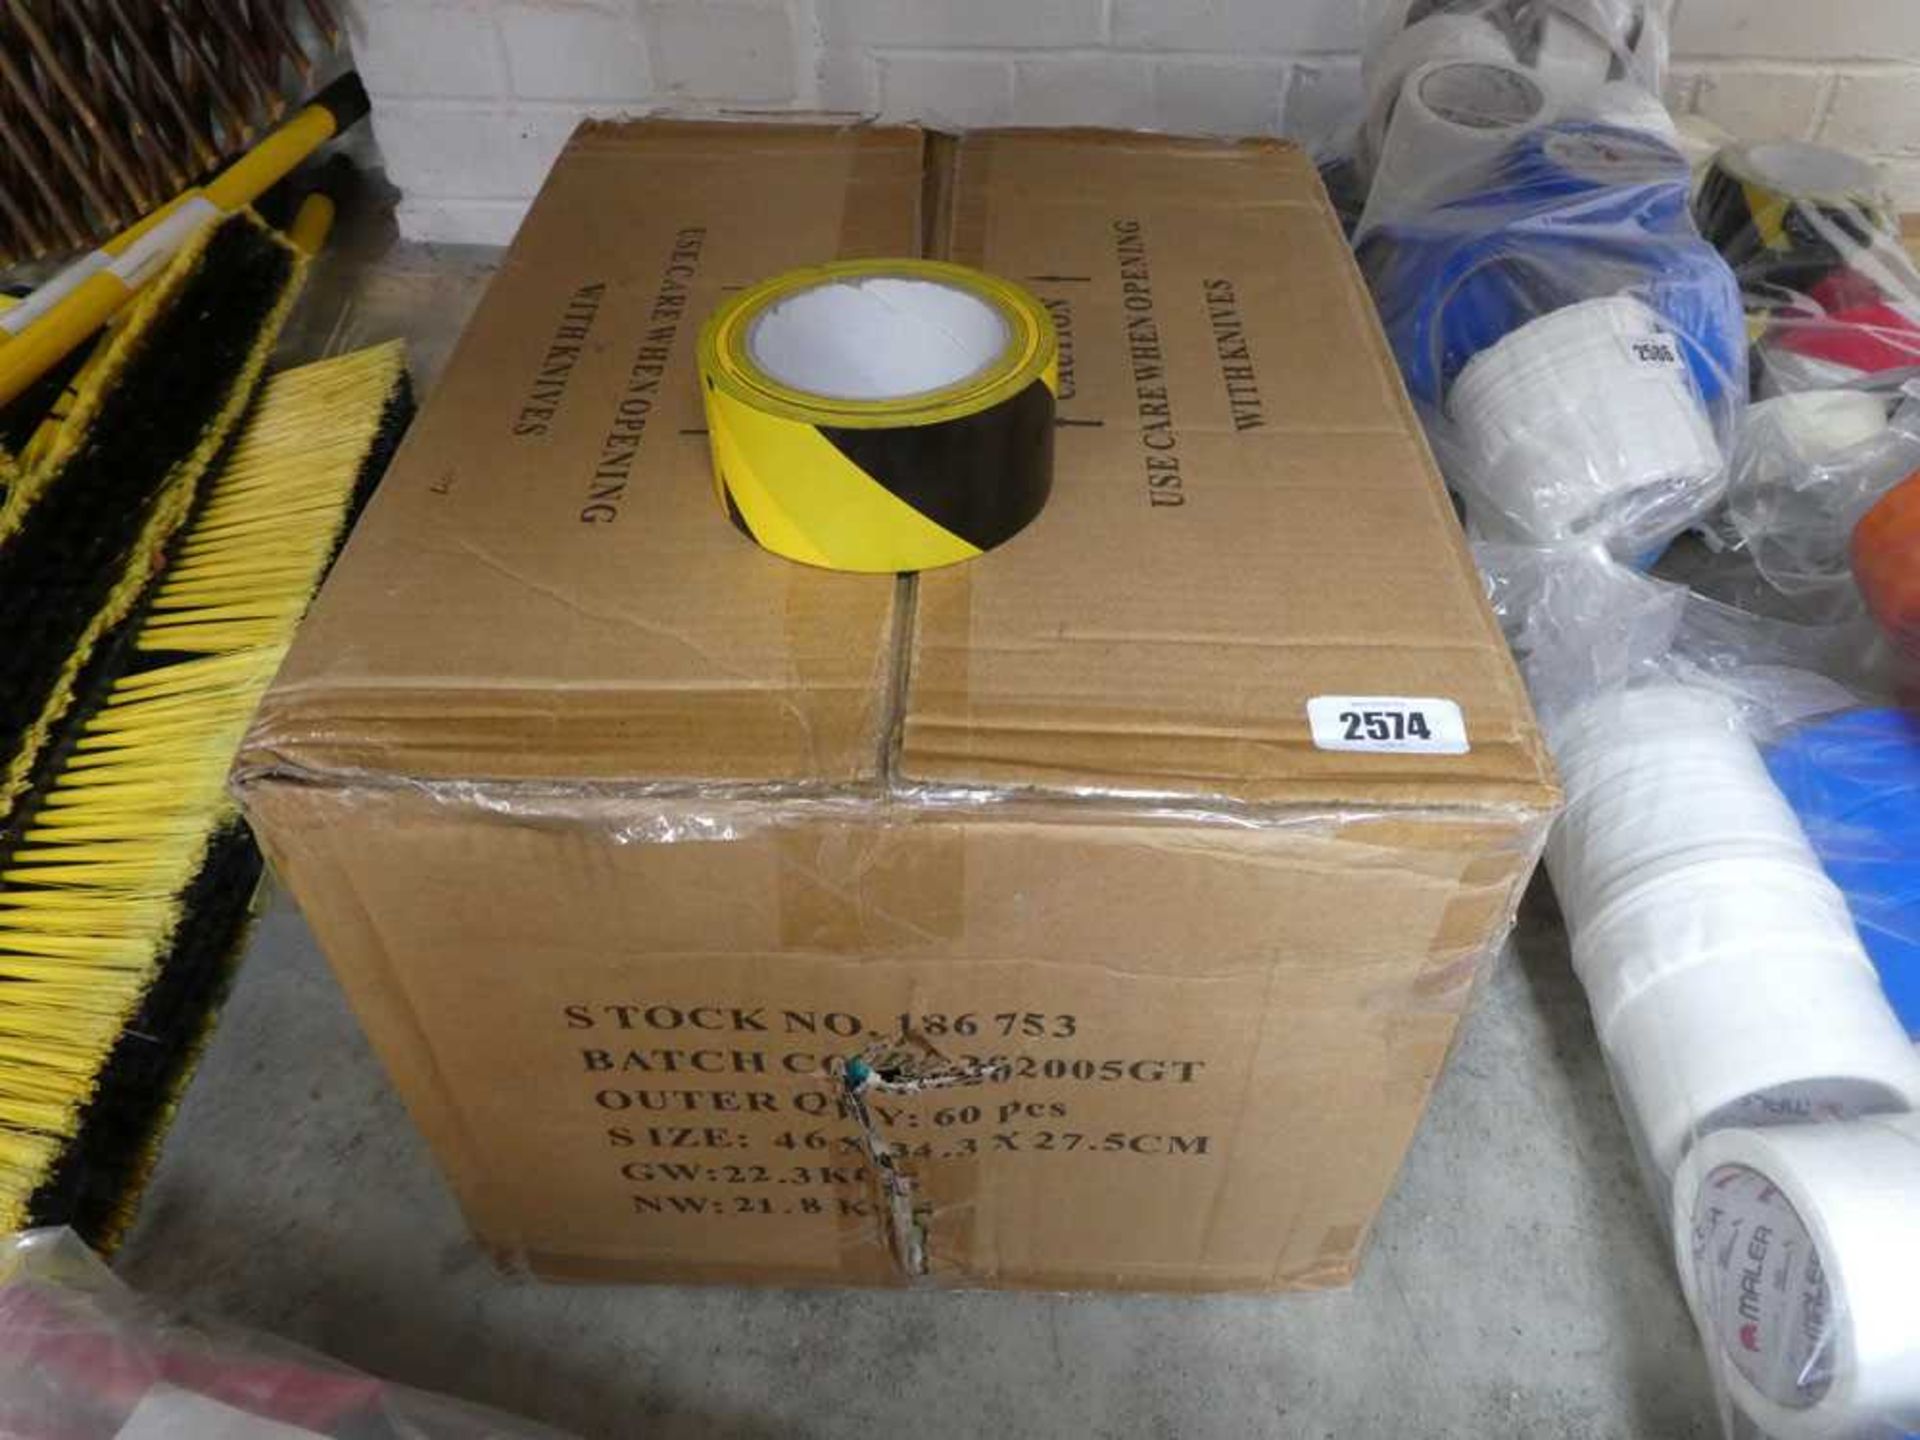 Box containing approximately 60 rolls of black & yellow hazardous tape